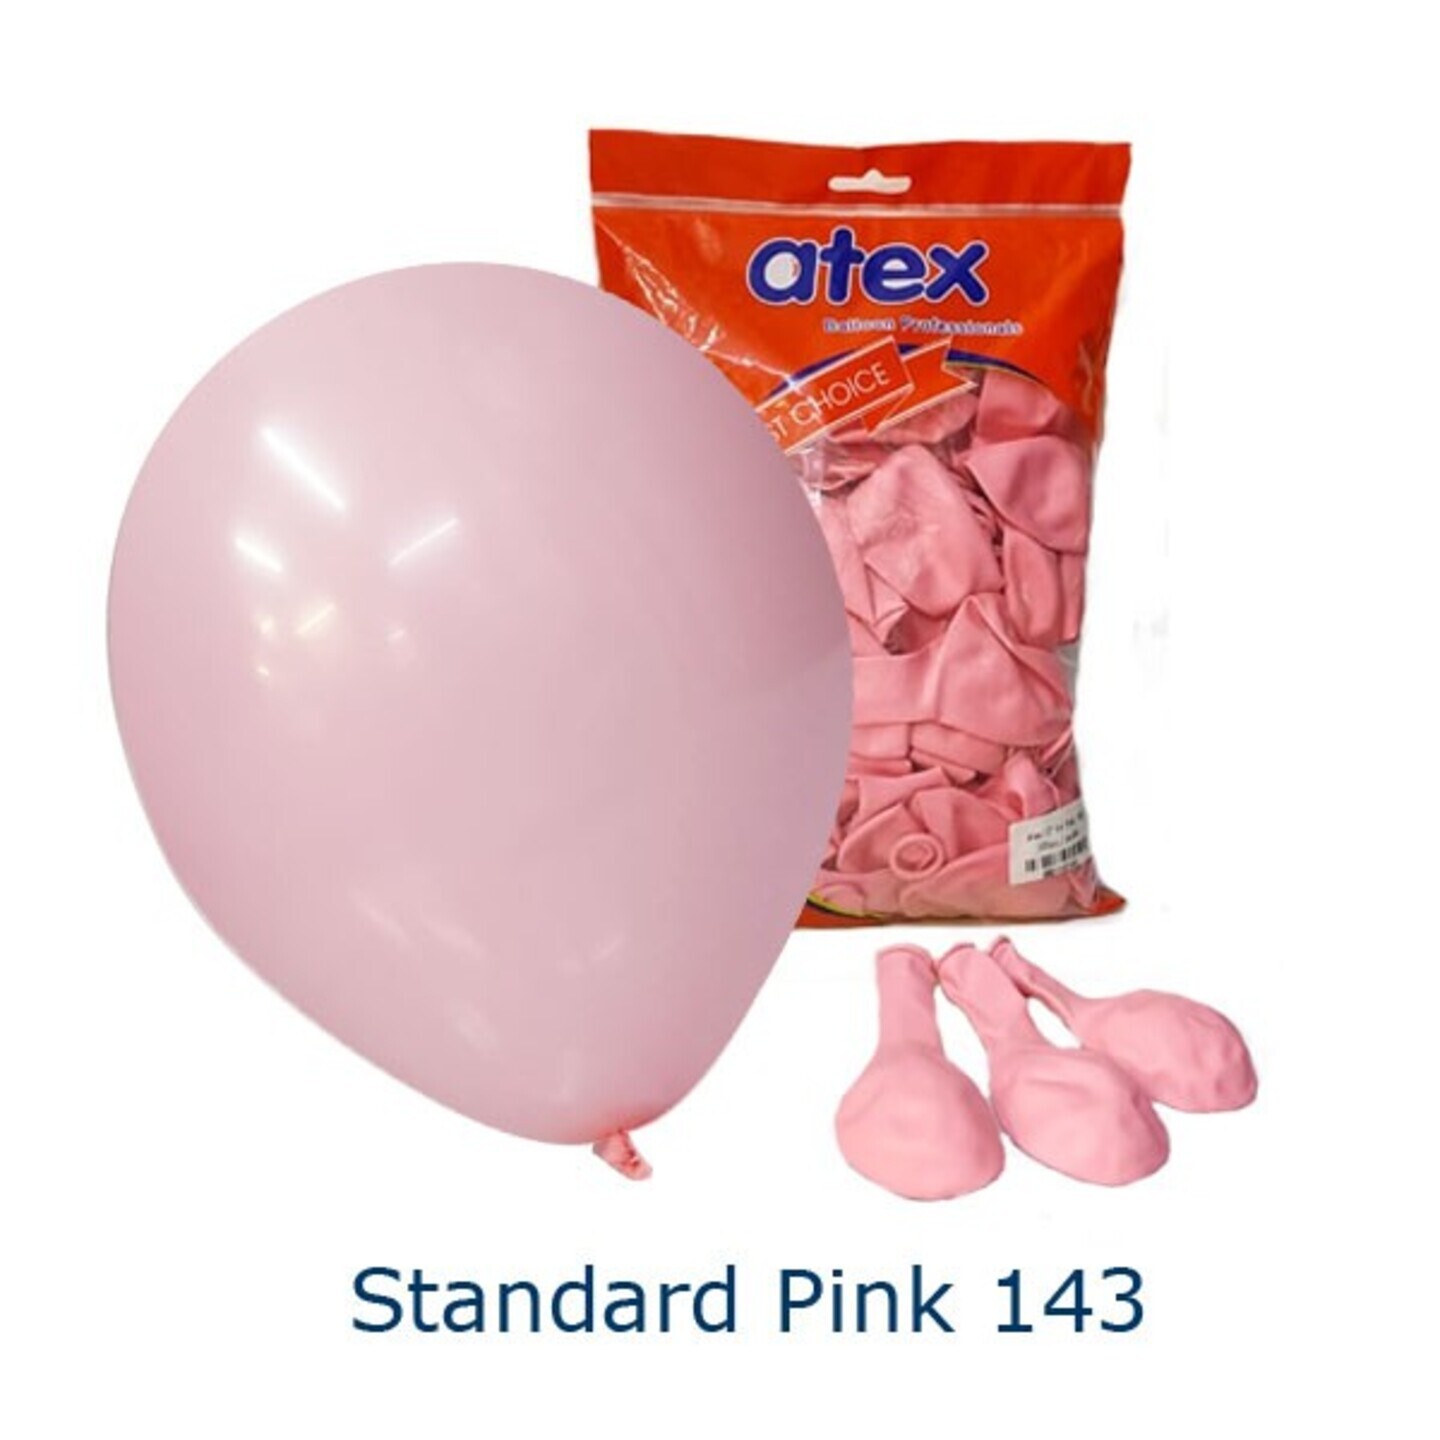 Standard Pink 143